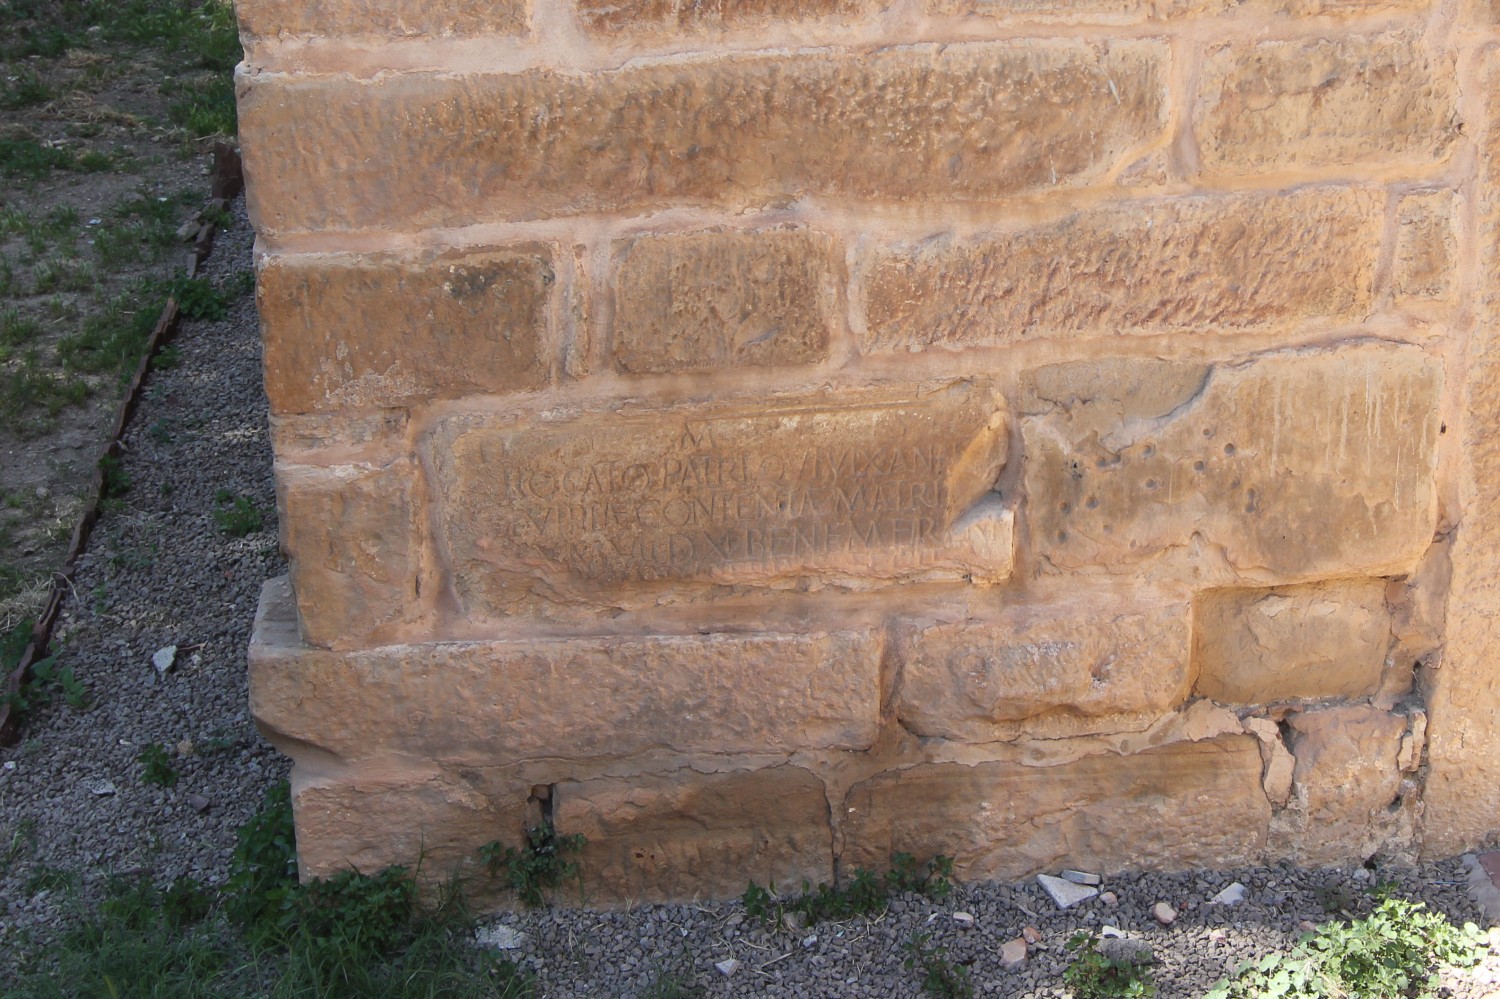 Latin inscriptions on the base of the minaret